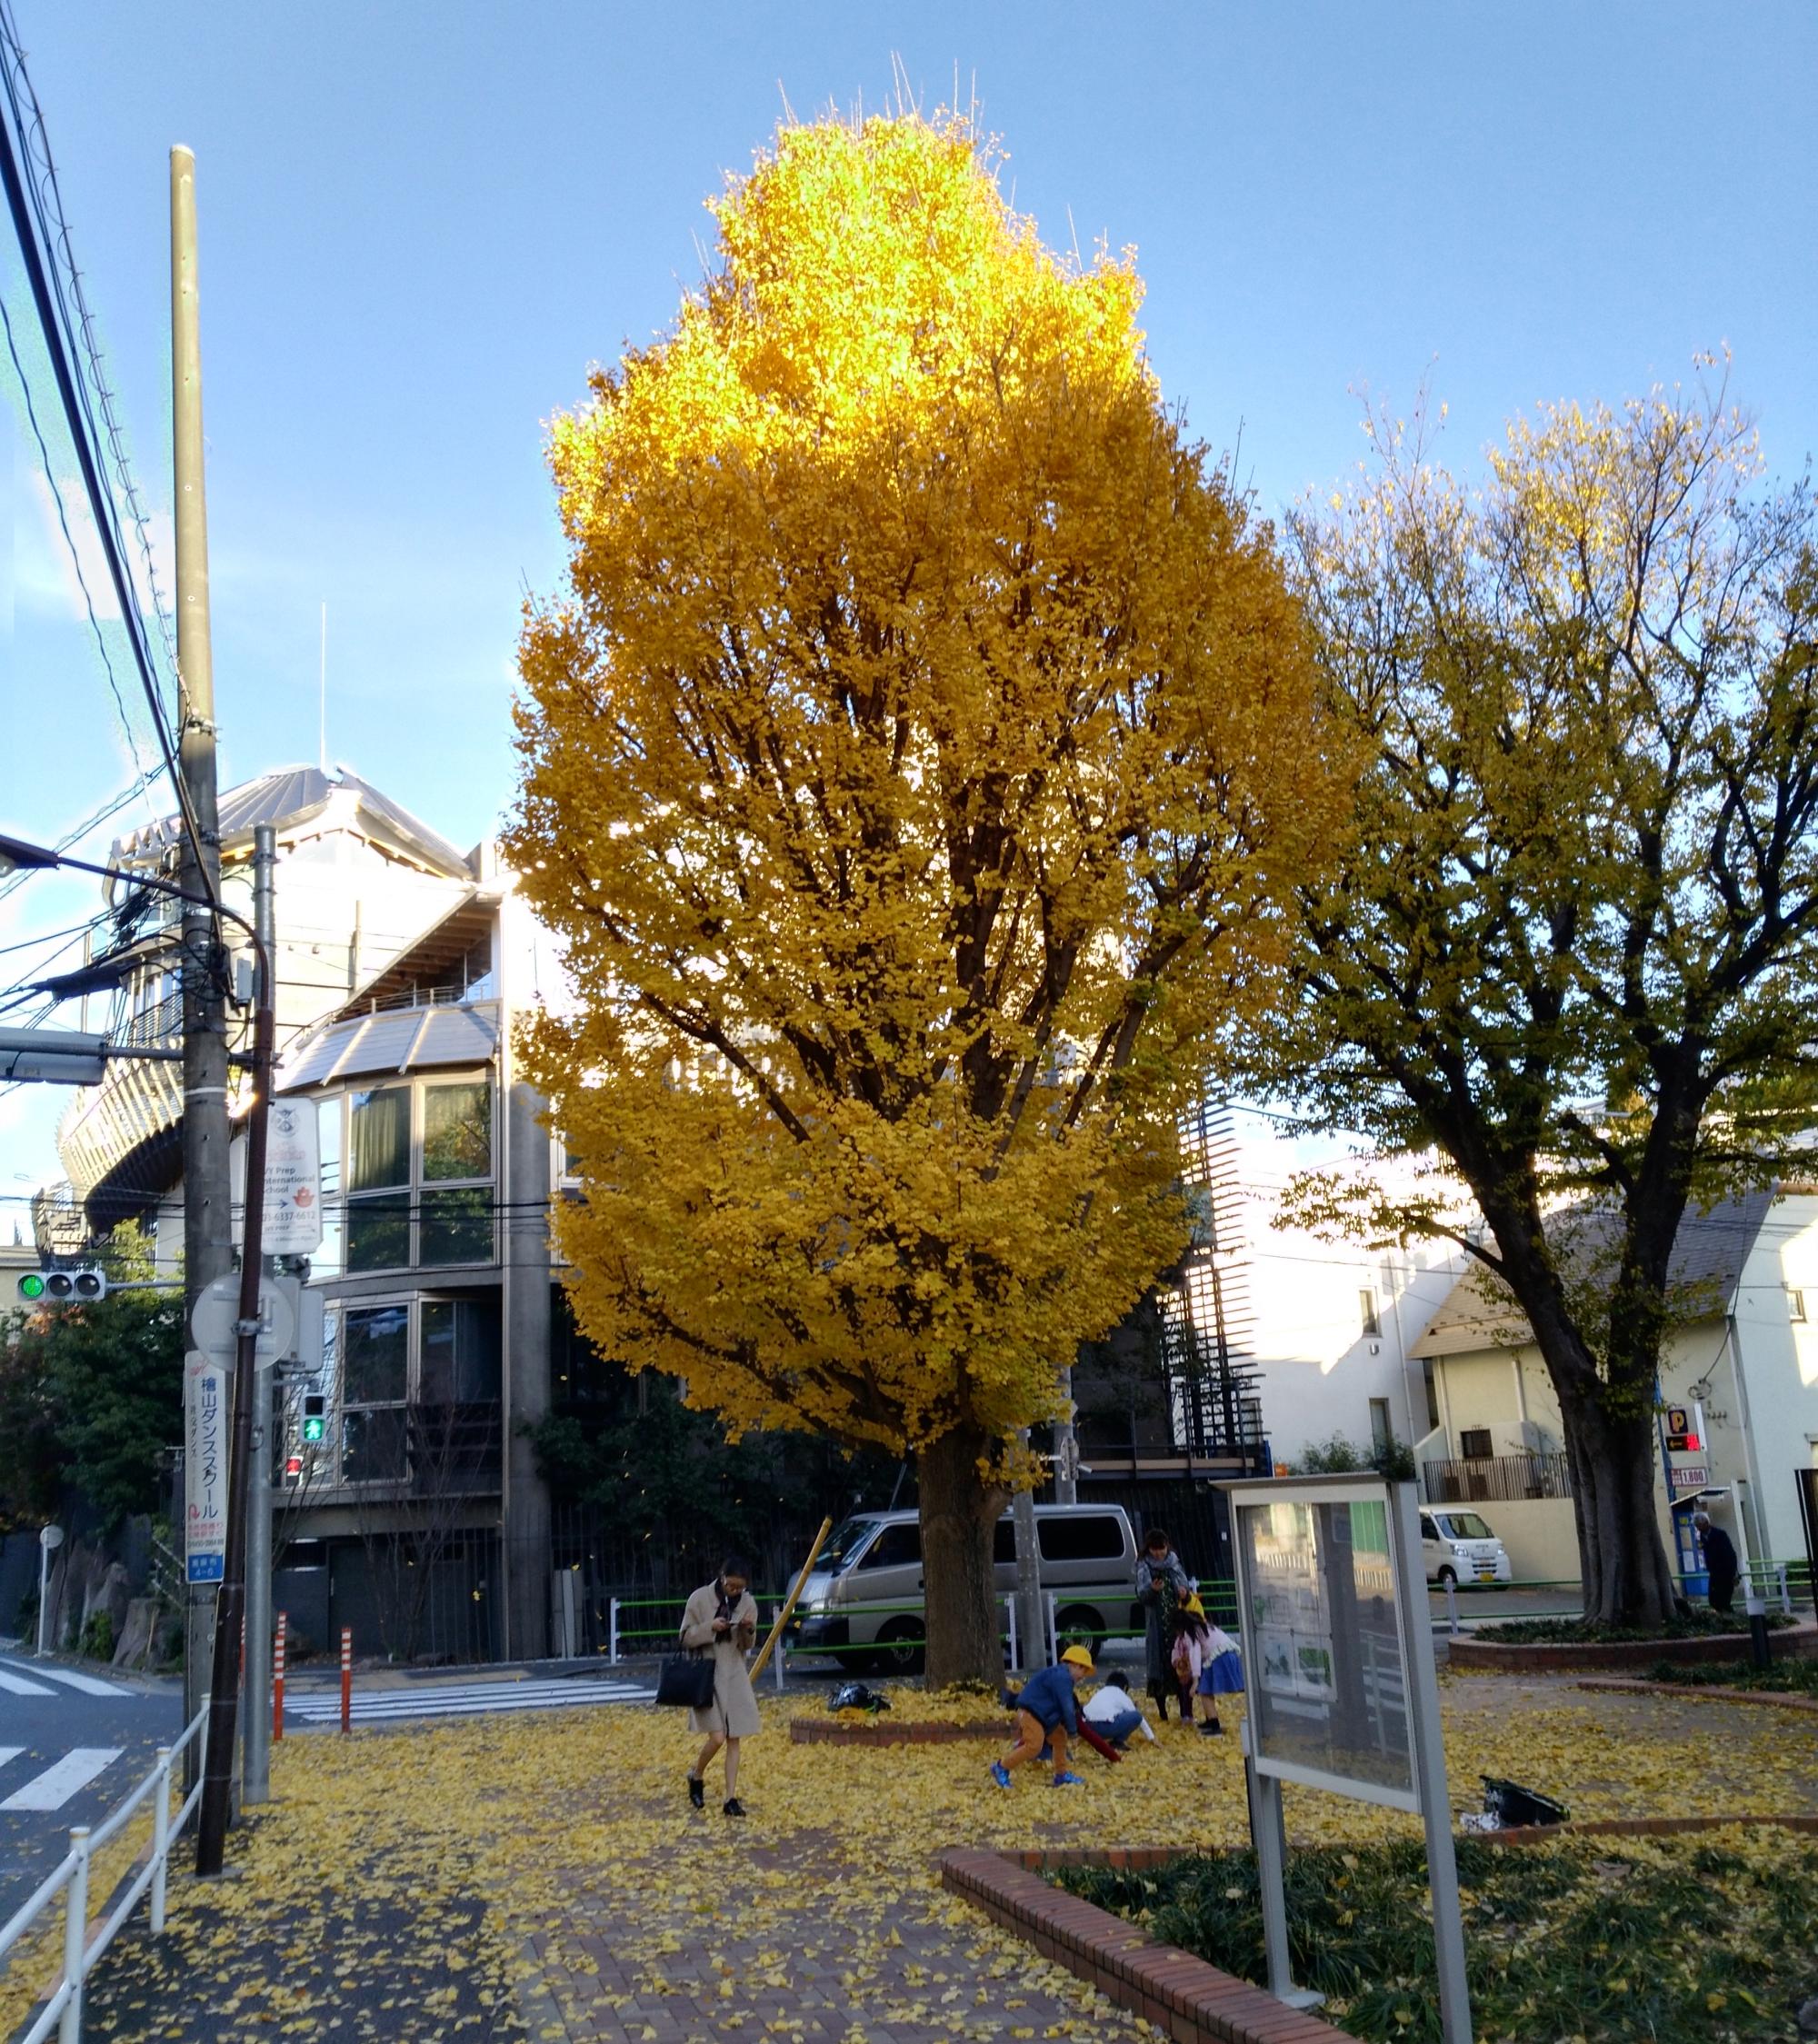 Tokyo (2017) - Yellow Leaves